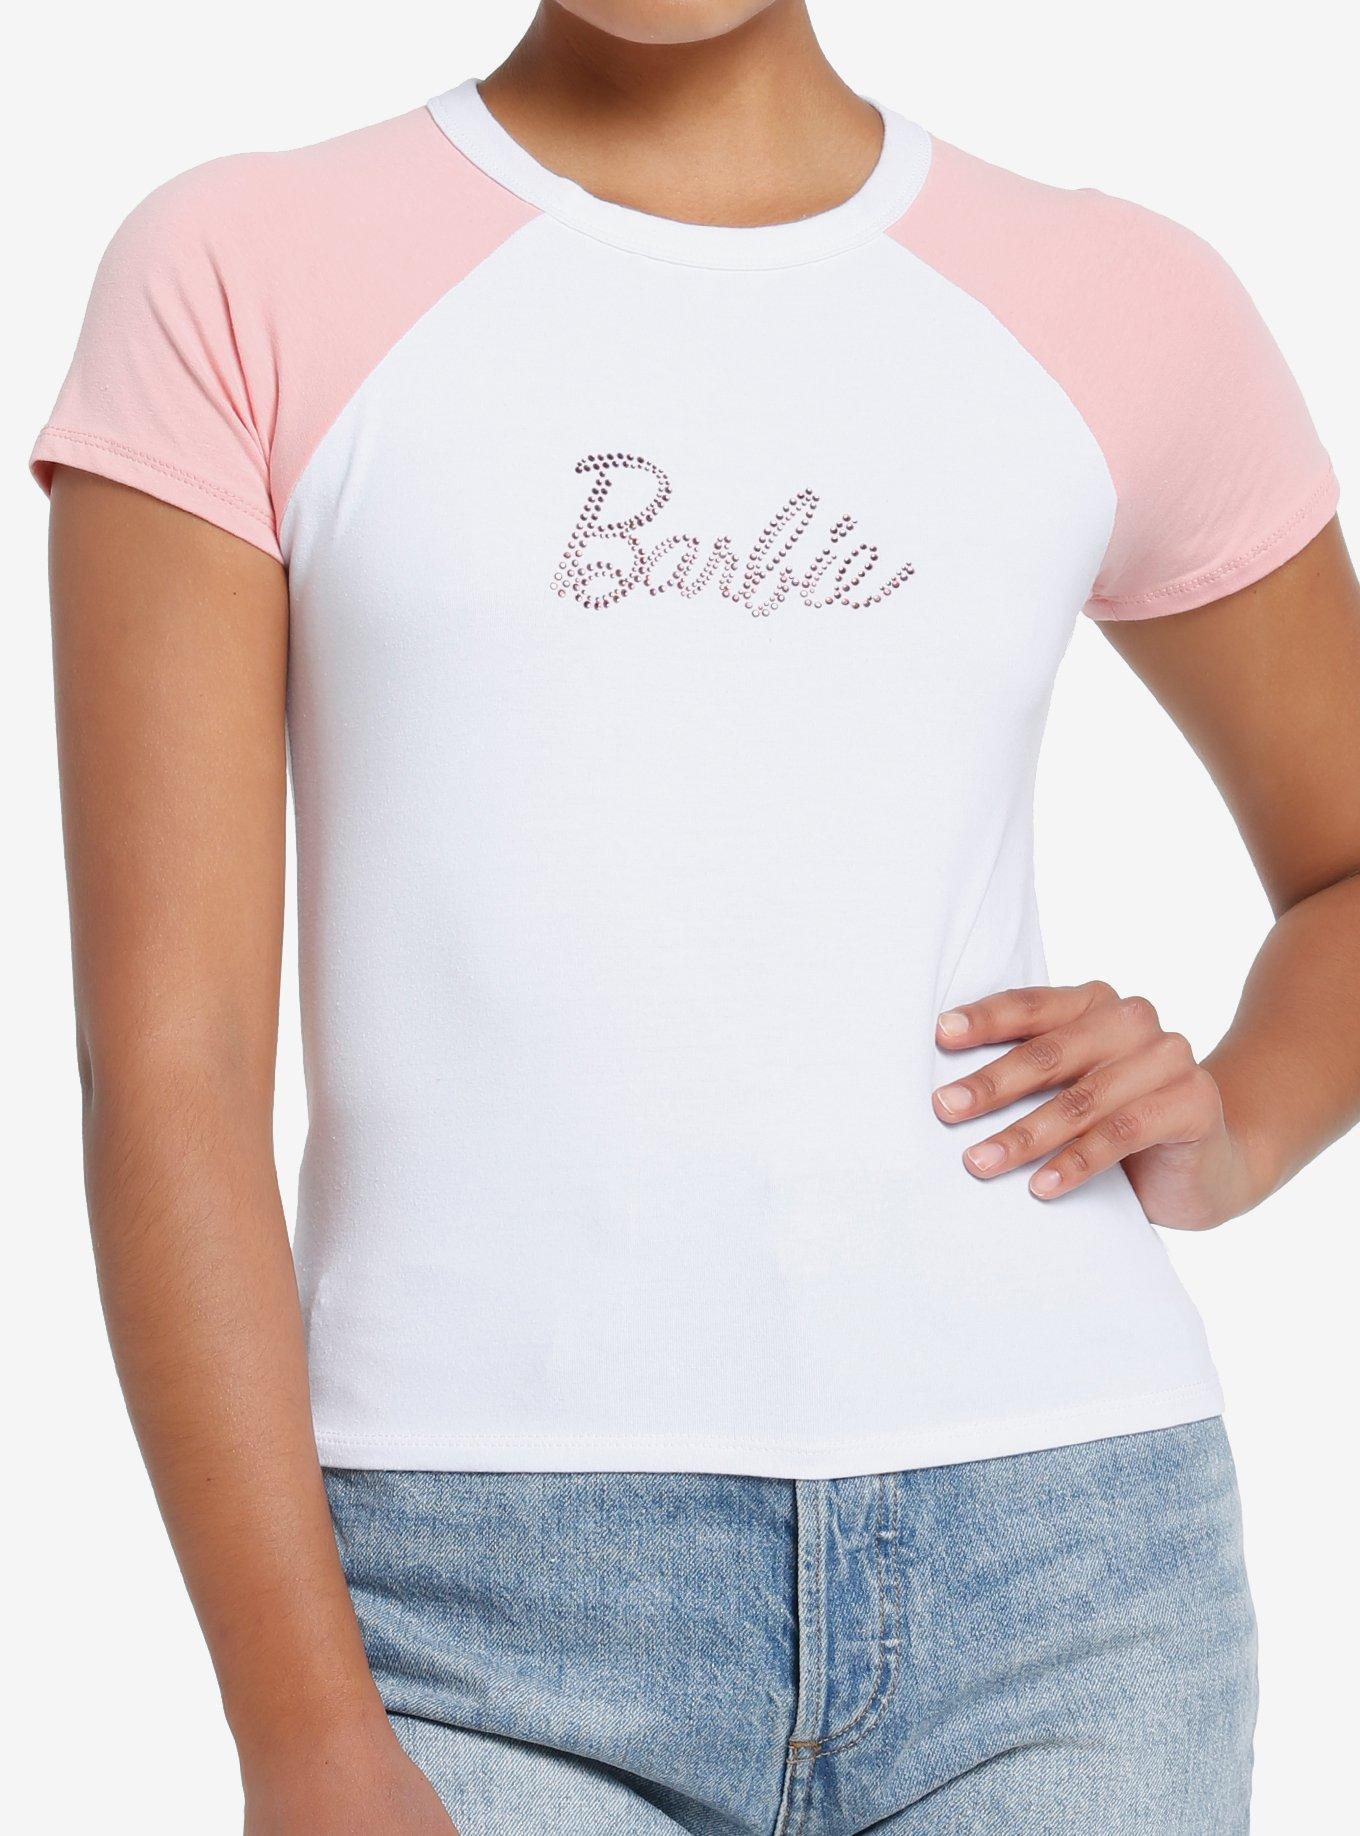 Barbie Shirt Women, Barbie Malibu Fashion Shirt,Barbie Pink,Black